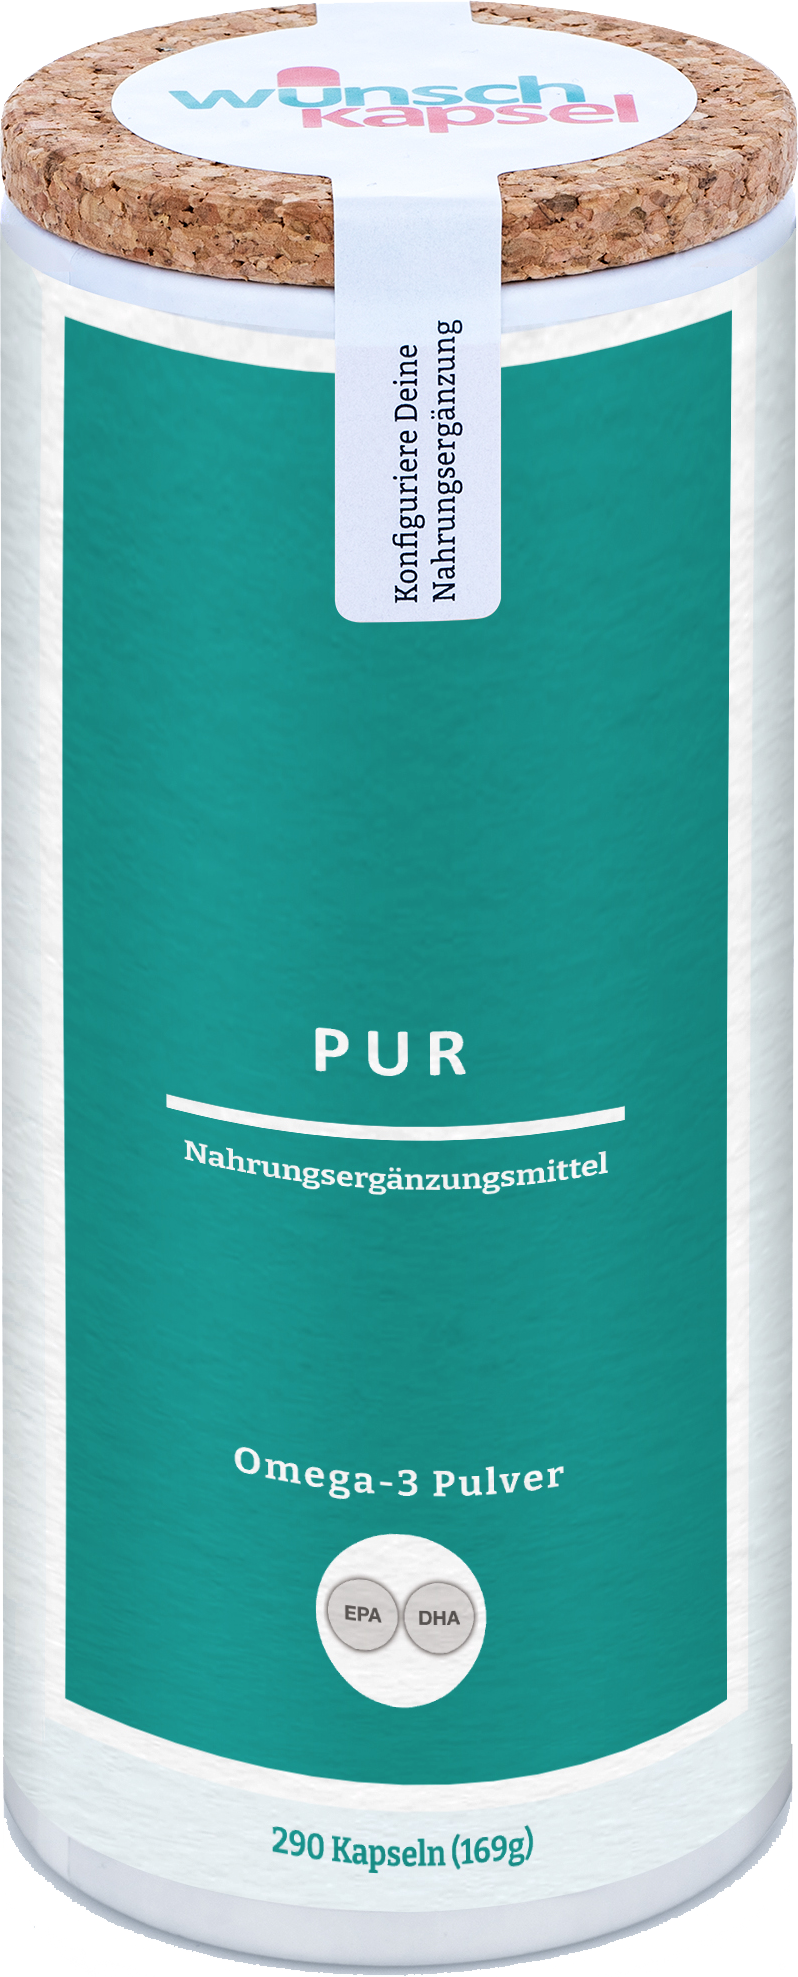 Omega-3-Pulver (11% EPA, 7% DHA)